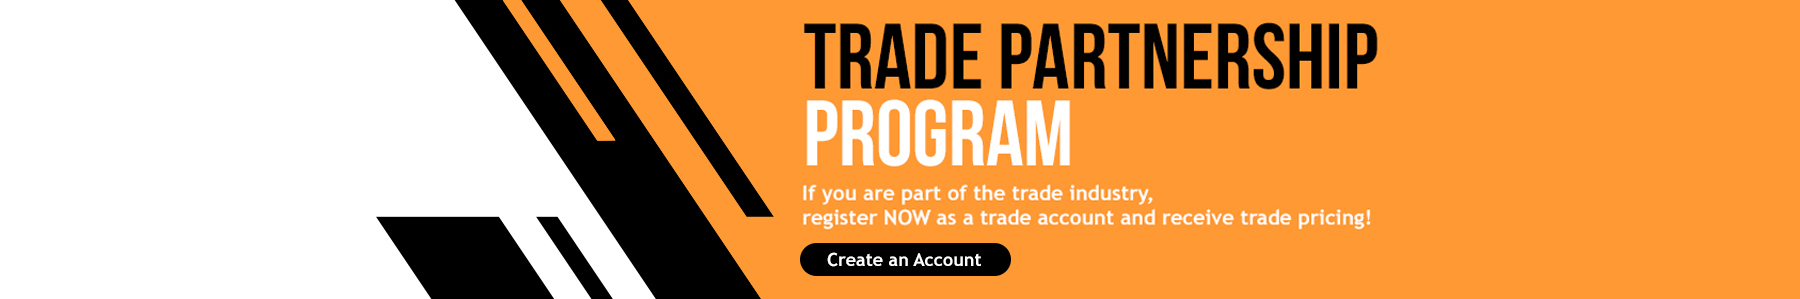 Trade Partnership Program